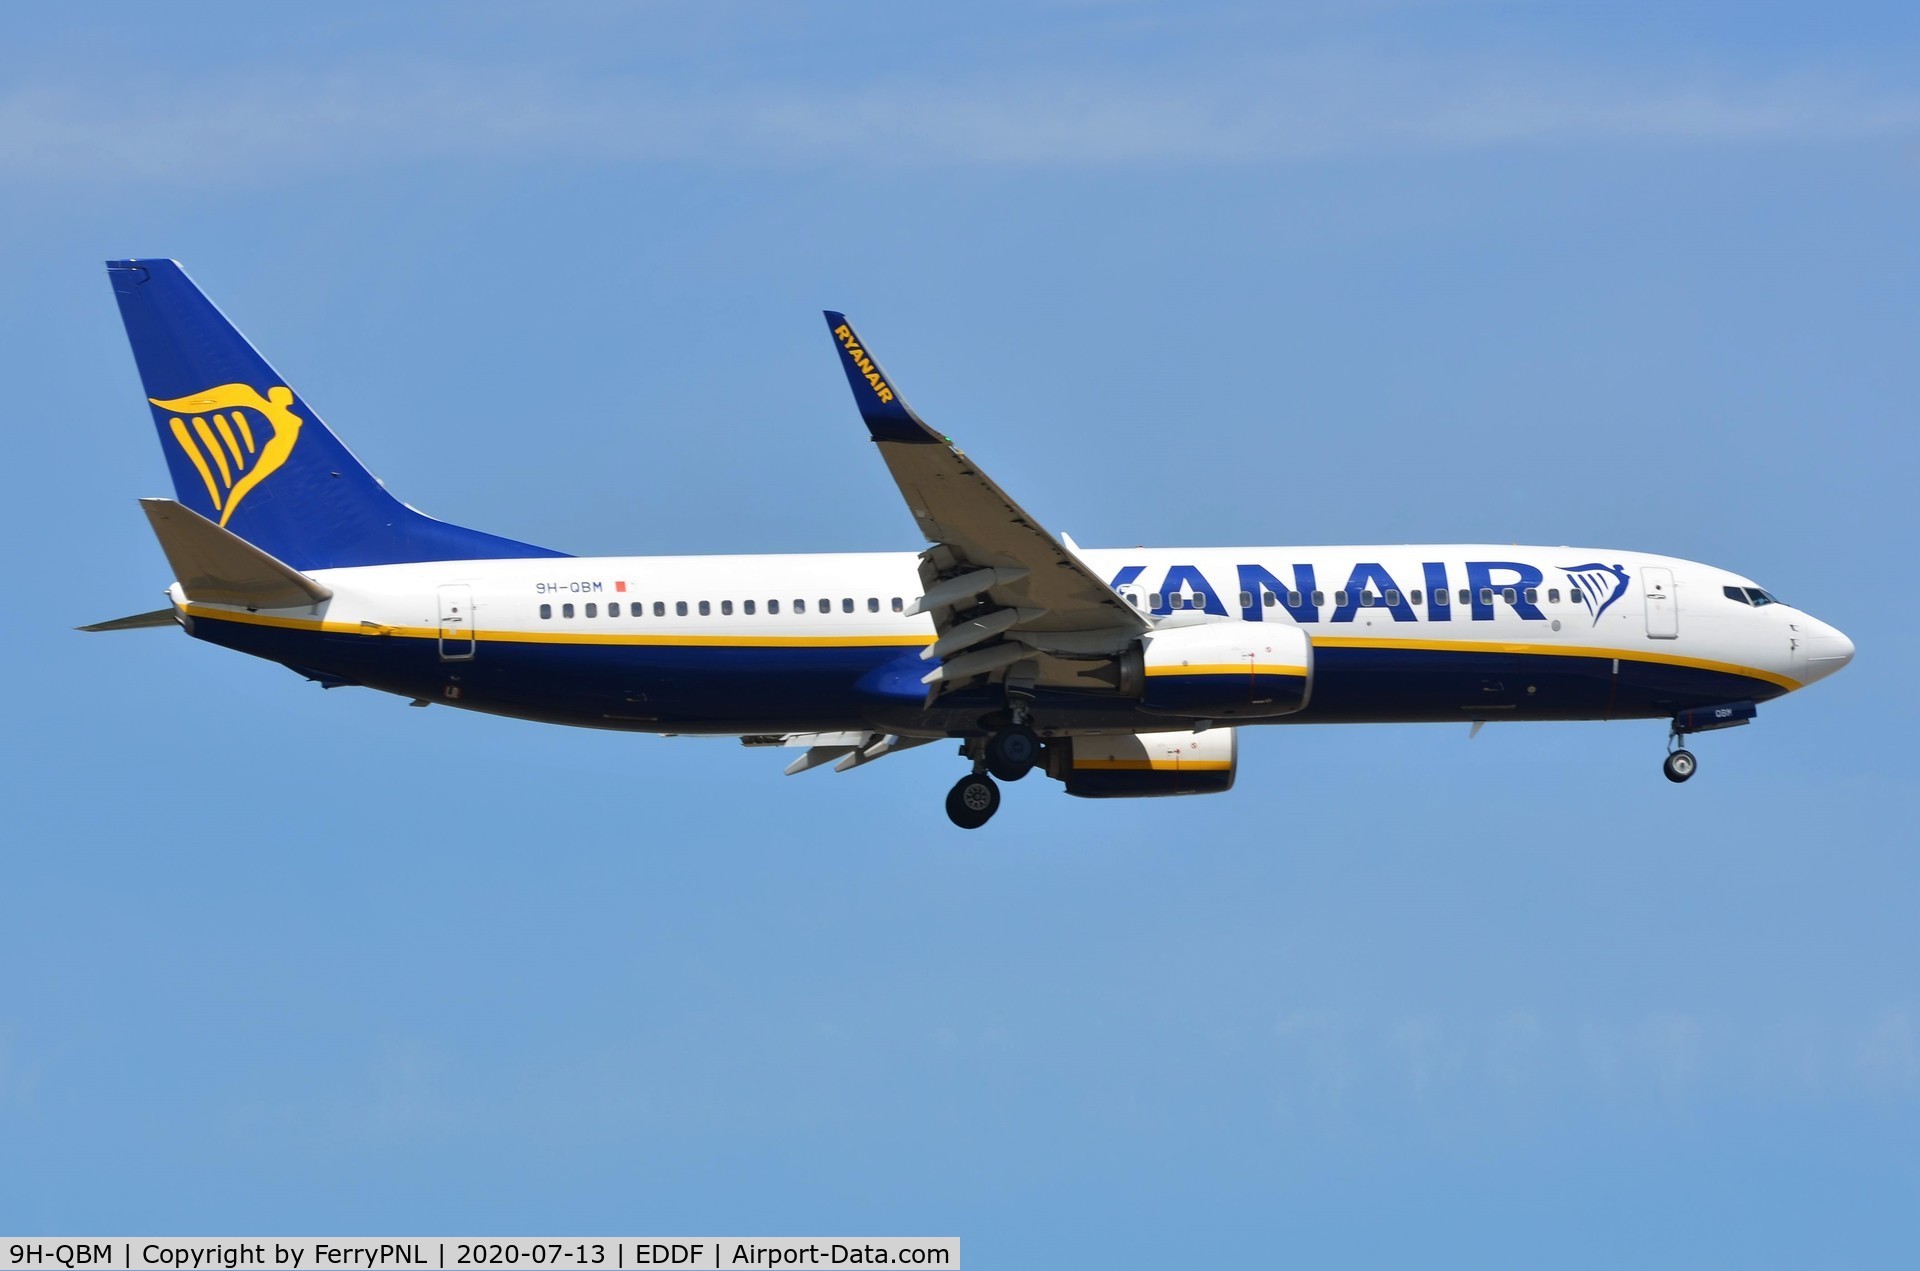 9H-QBM, 2015 Boeing 737-8AS C/N 44708, Ryanair B738 landing